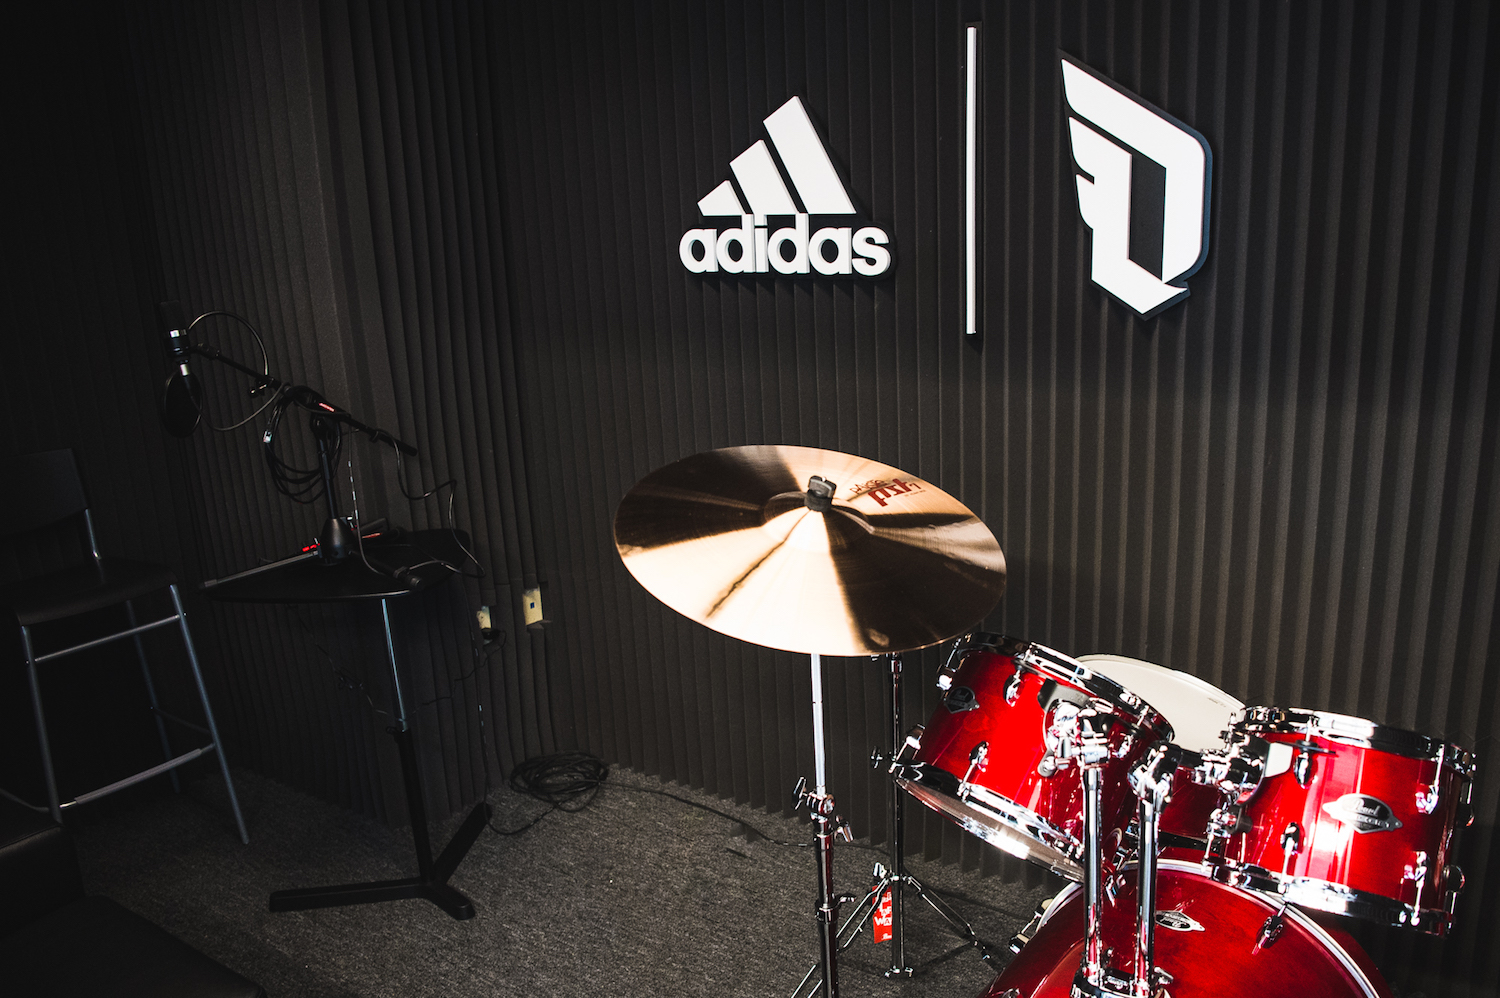 adidas Dame 3 Oakland High recording studio 2